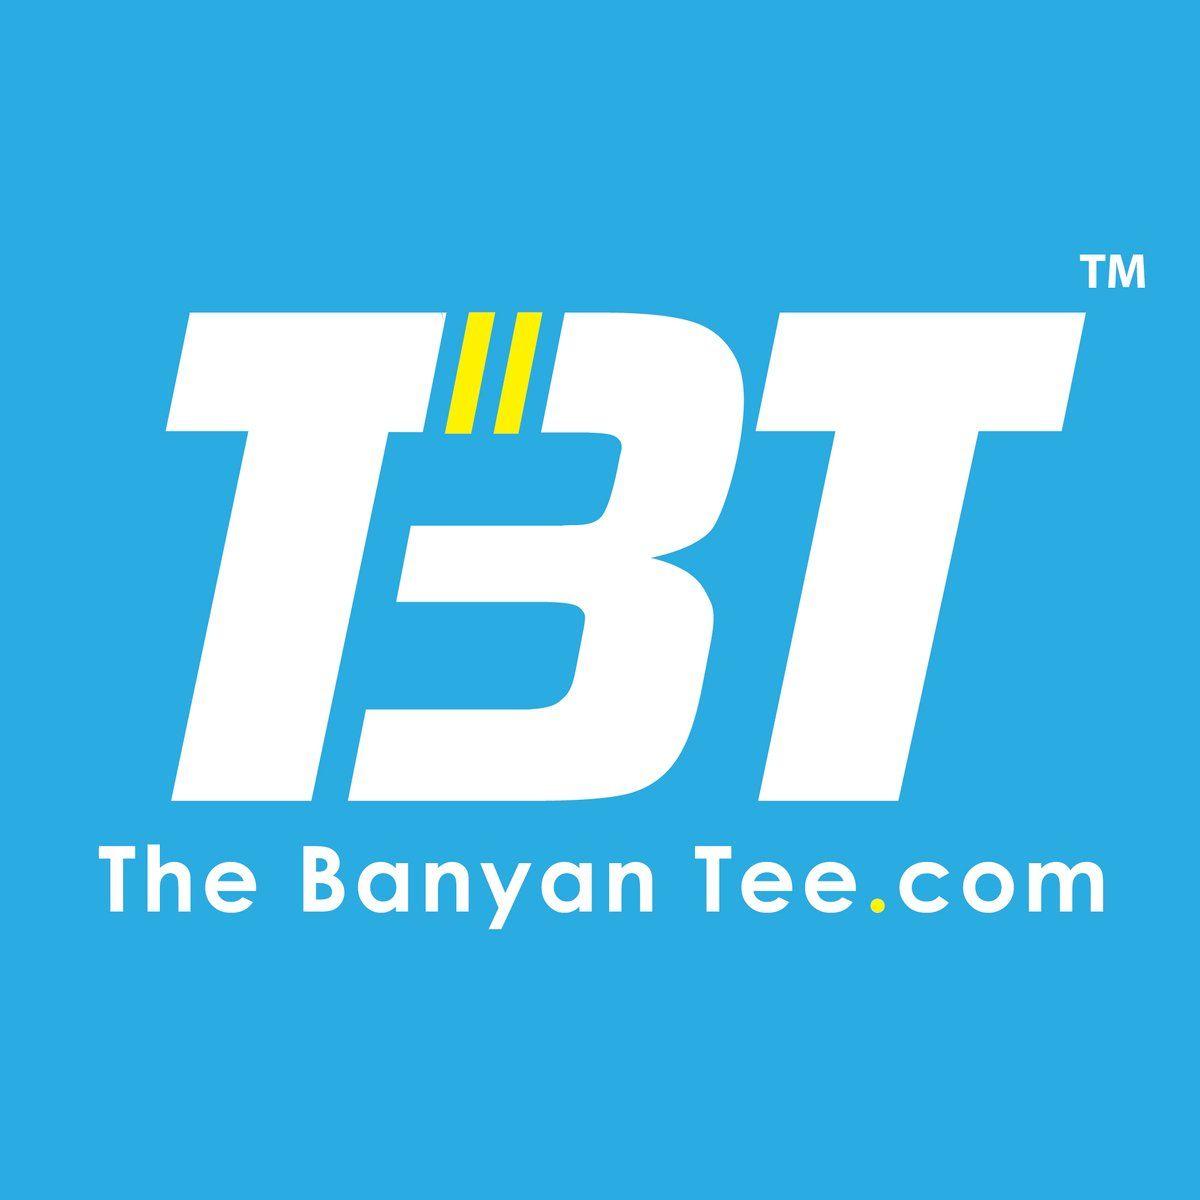 TBT Logo - The Banyan Tee - T-shirts, Hoodies, Mugs and more - TBT